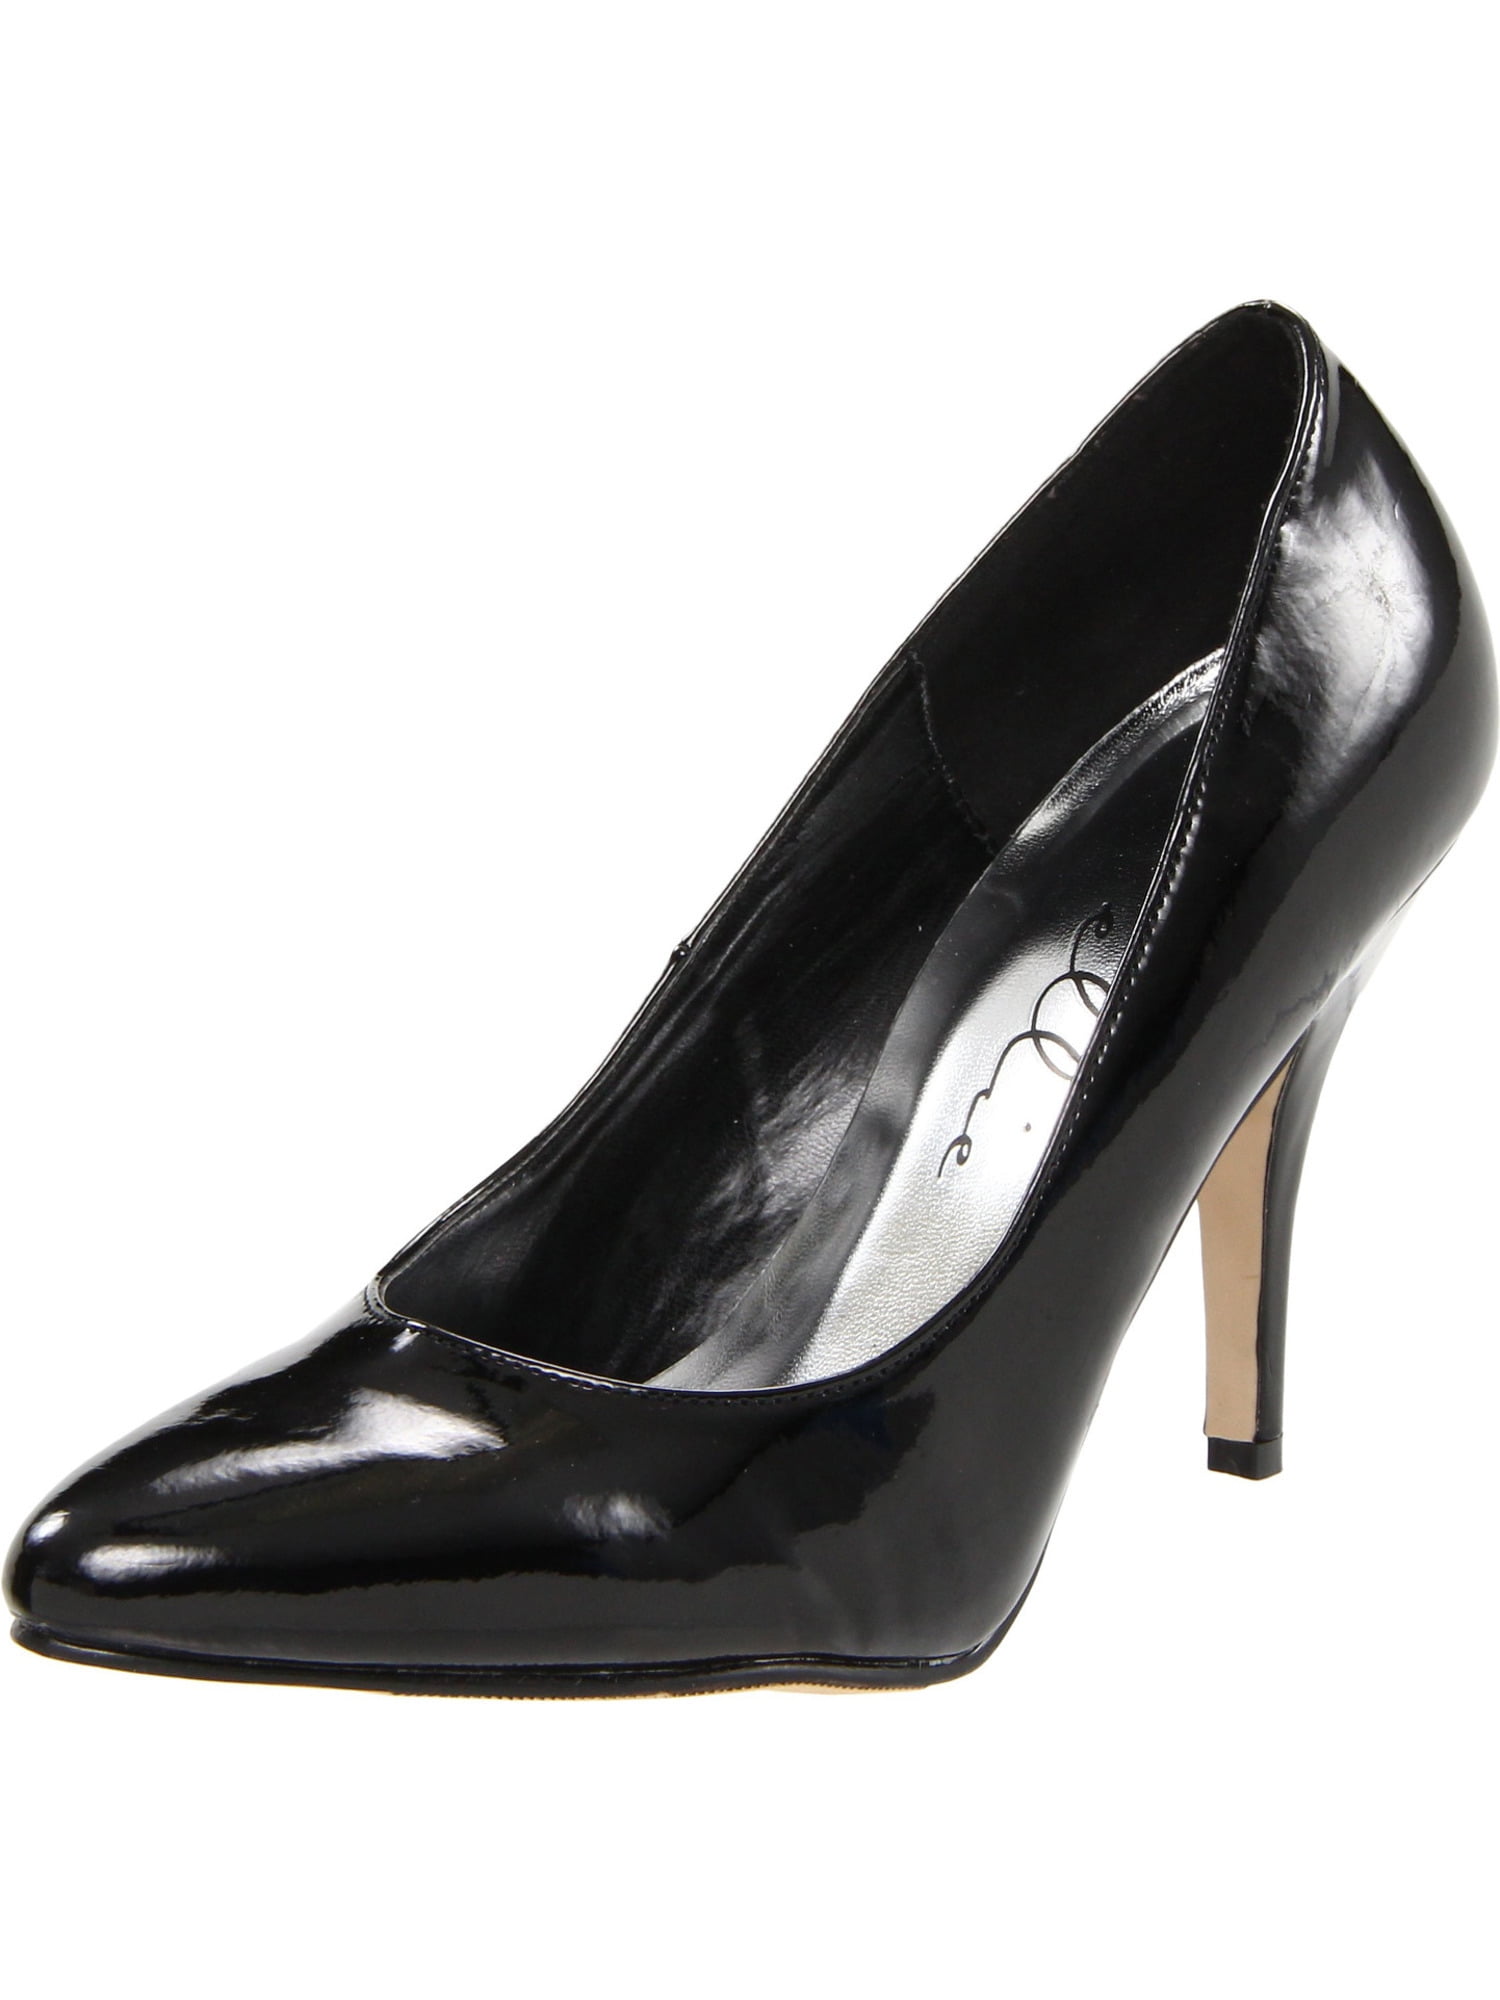 4 inch heels black